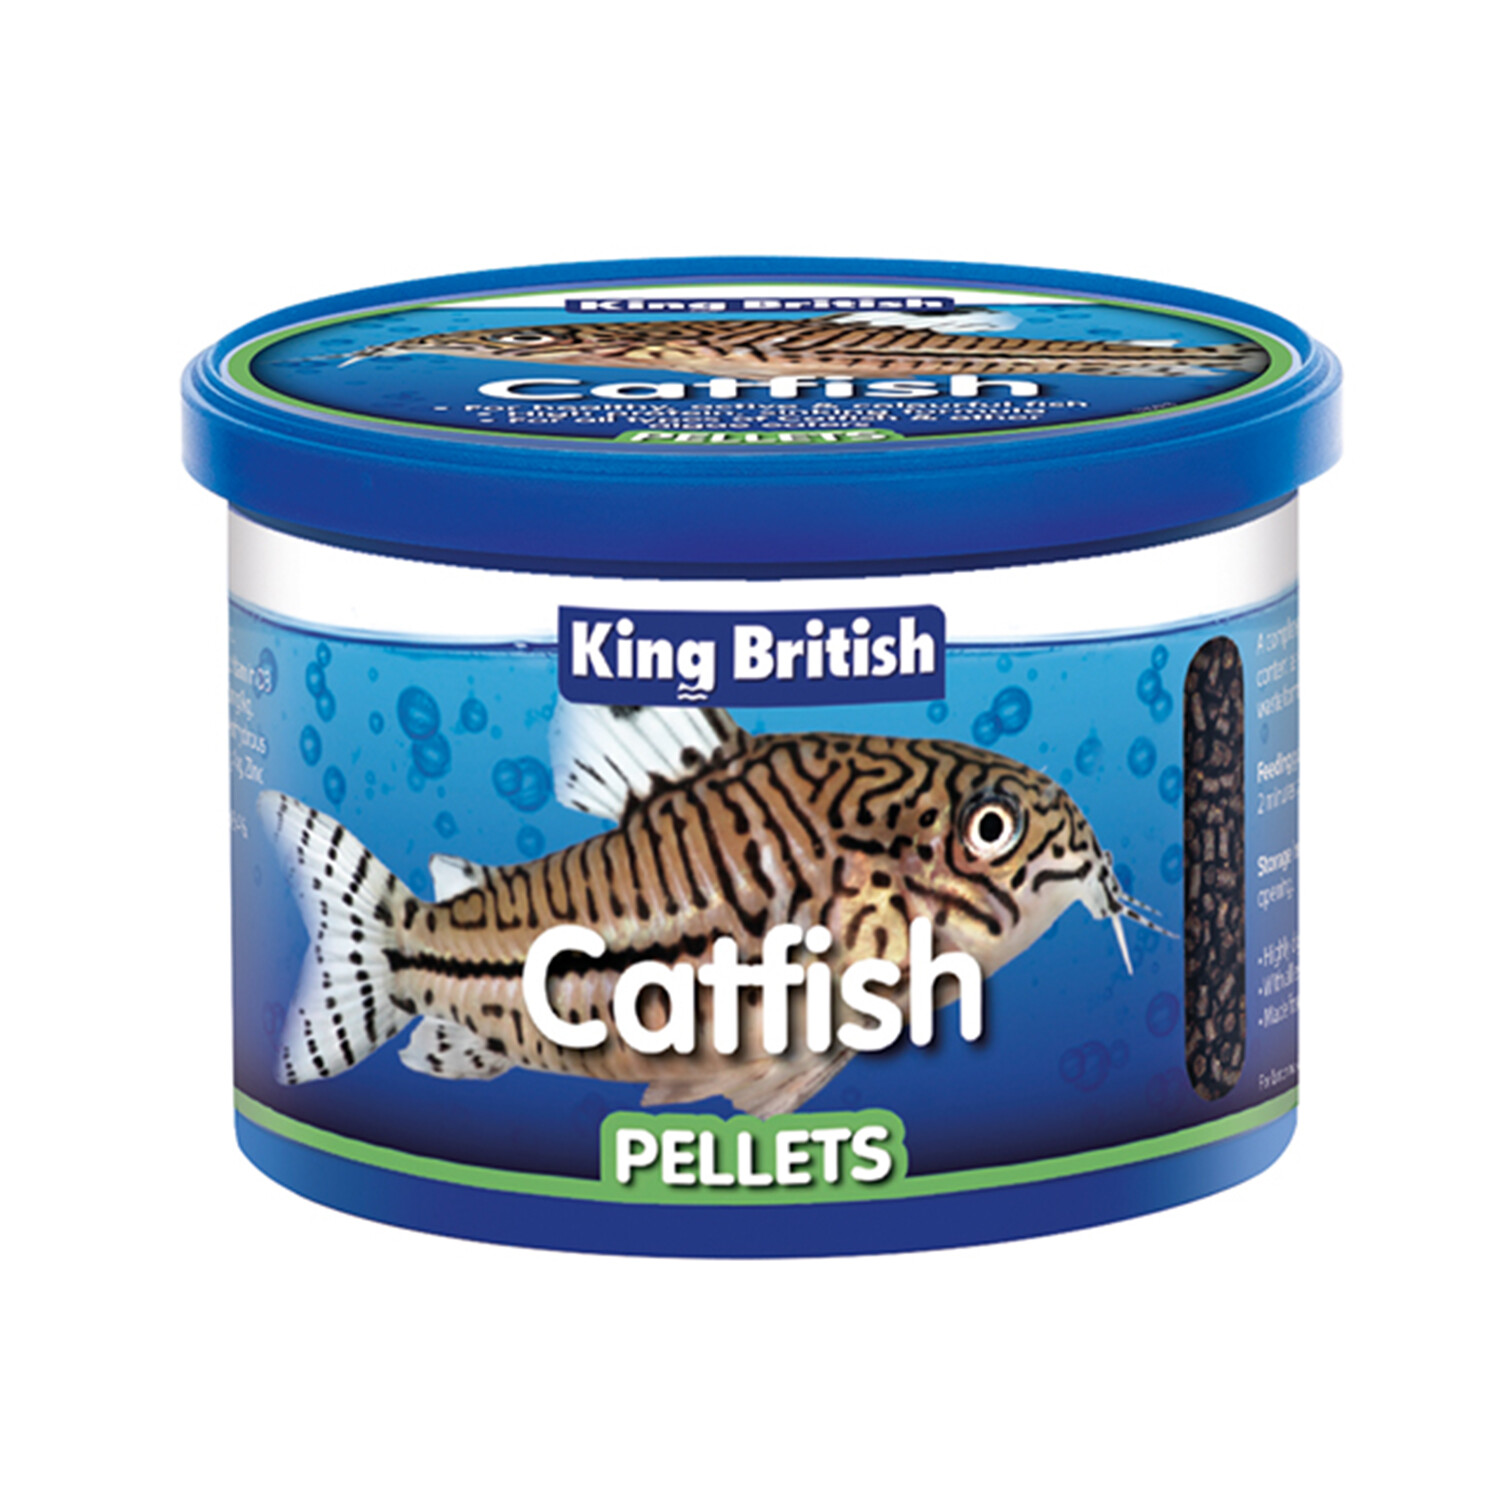 King British Catfish Pellets Image